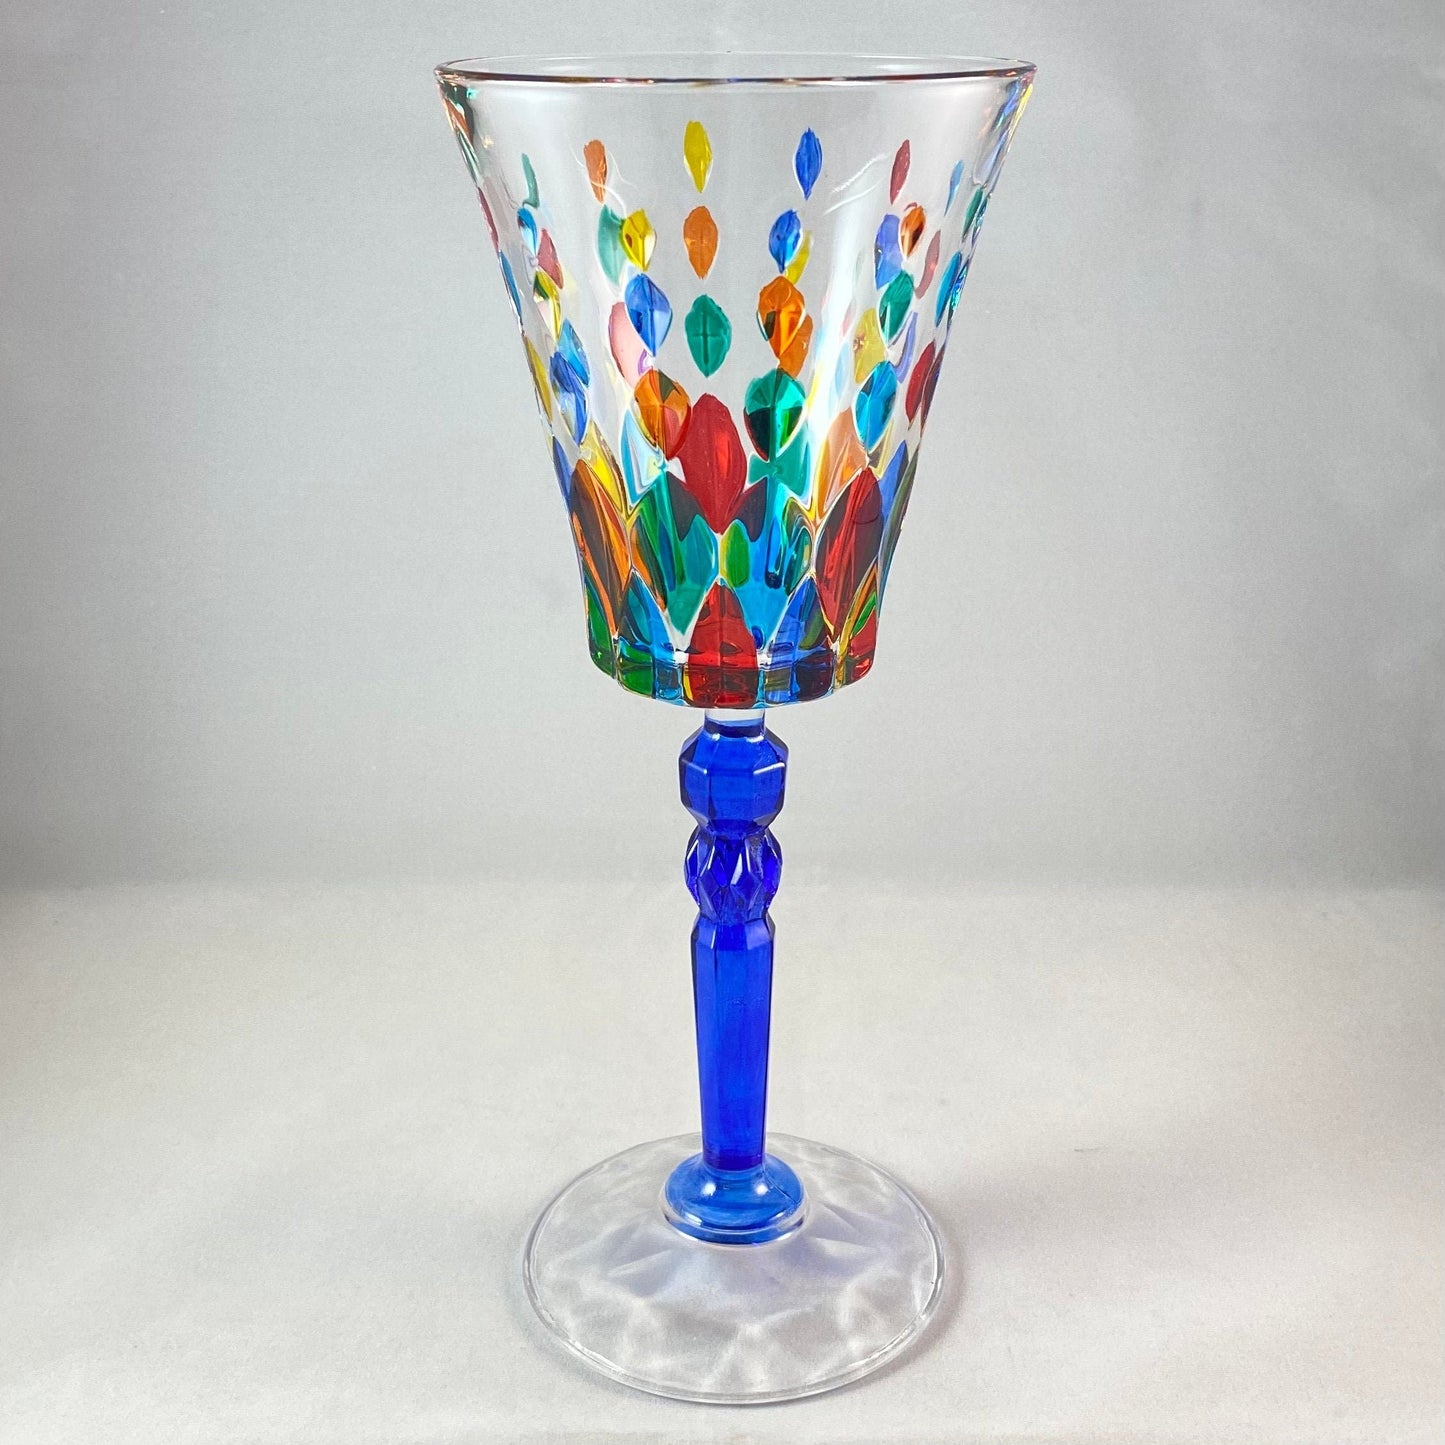 Blue Stem Marilyn Venetian Glass Wine Glass - Handmade in Italy, Colorful Murano Glass